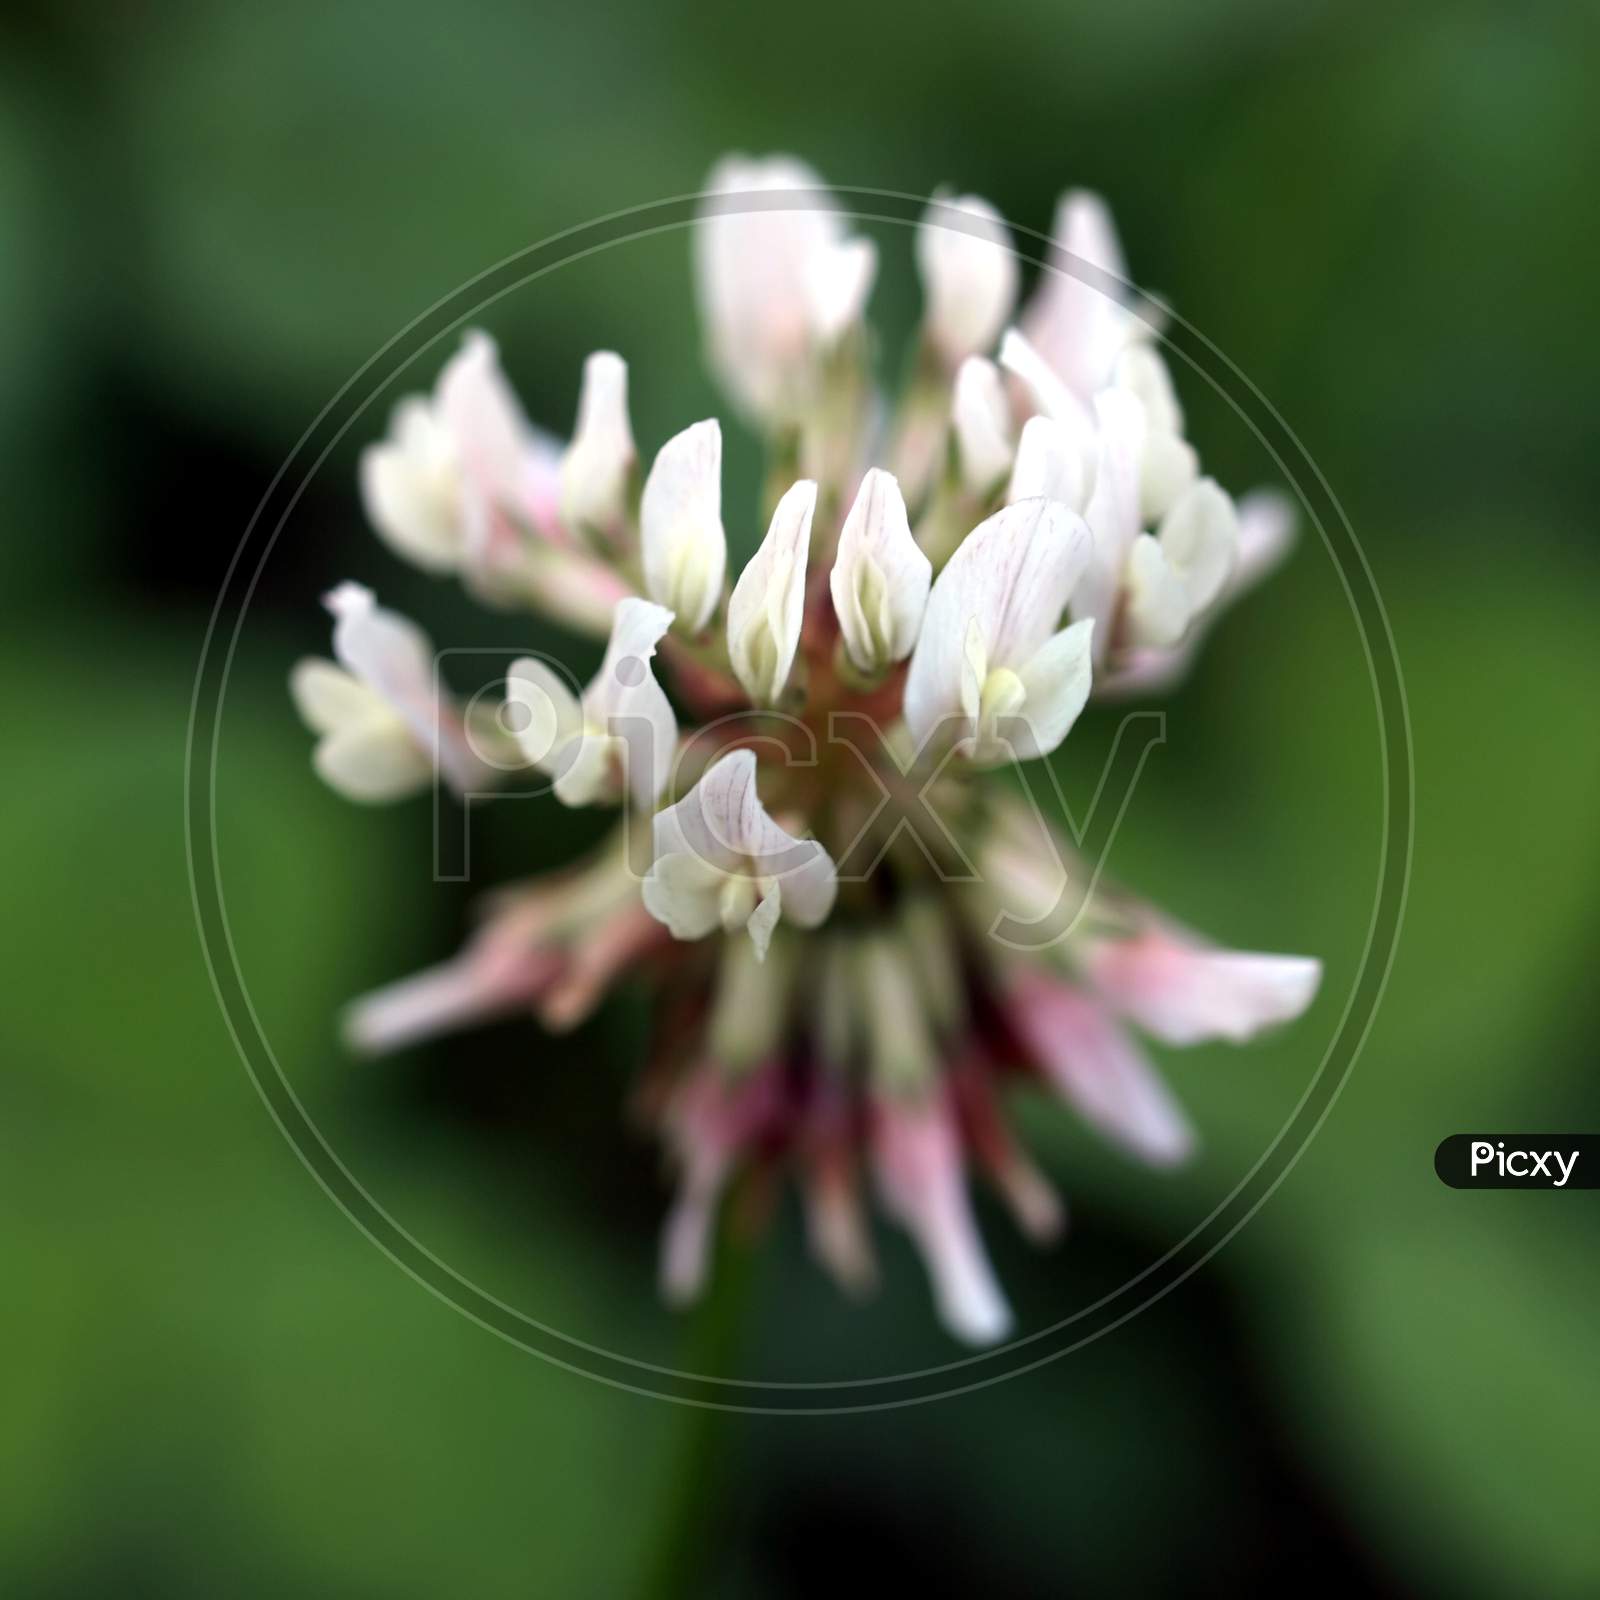 Clover Plant (Trifolium) White Flower